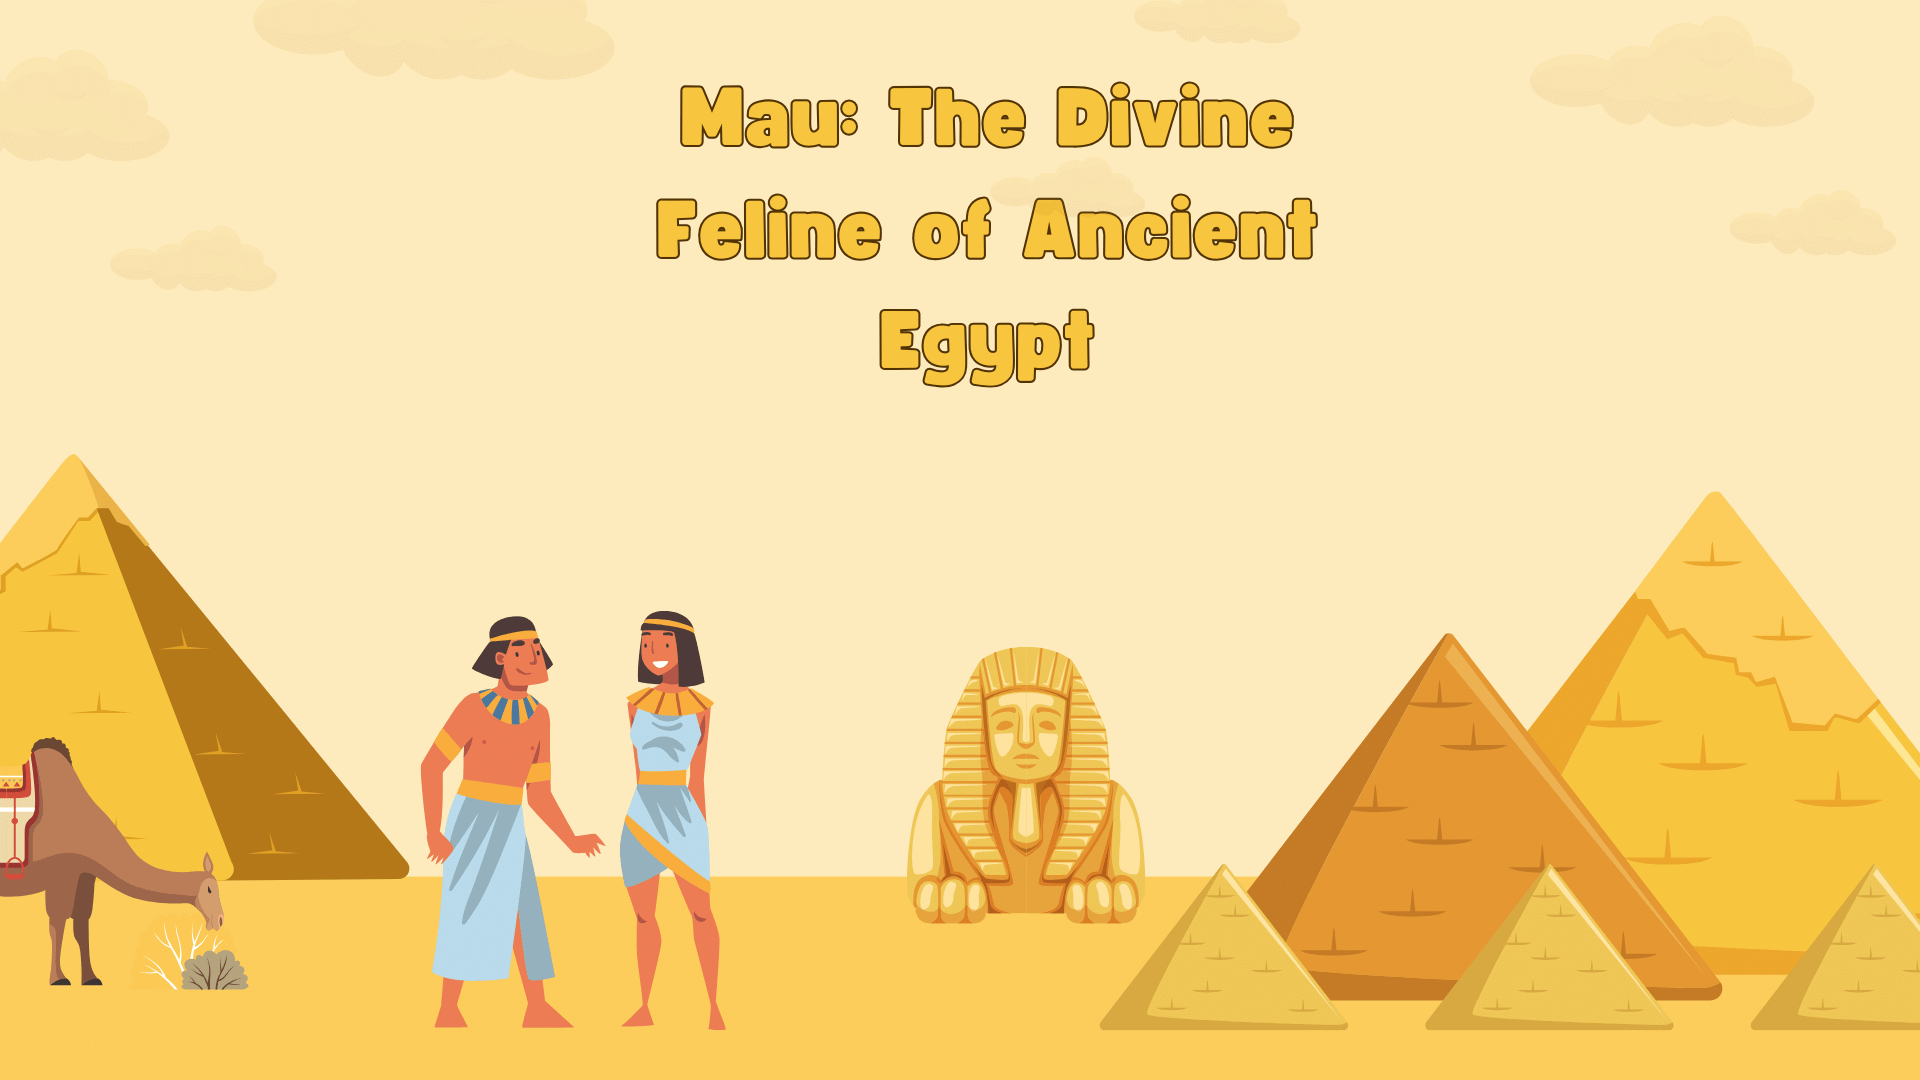 Mau: The Divine Feline of Ancient Egypt